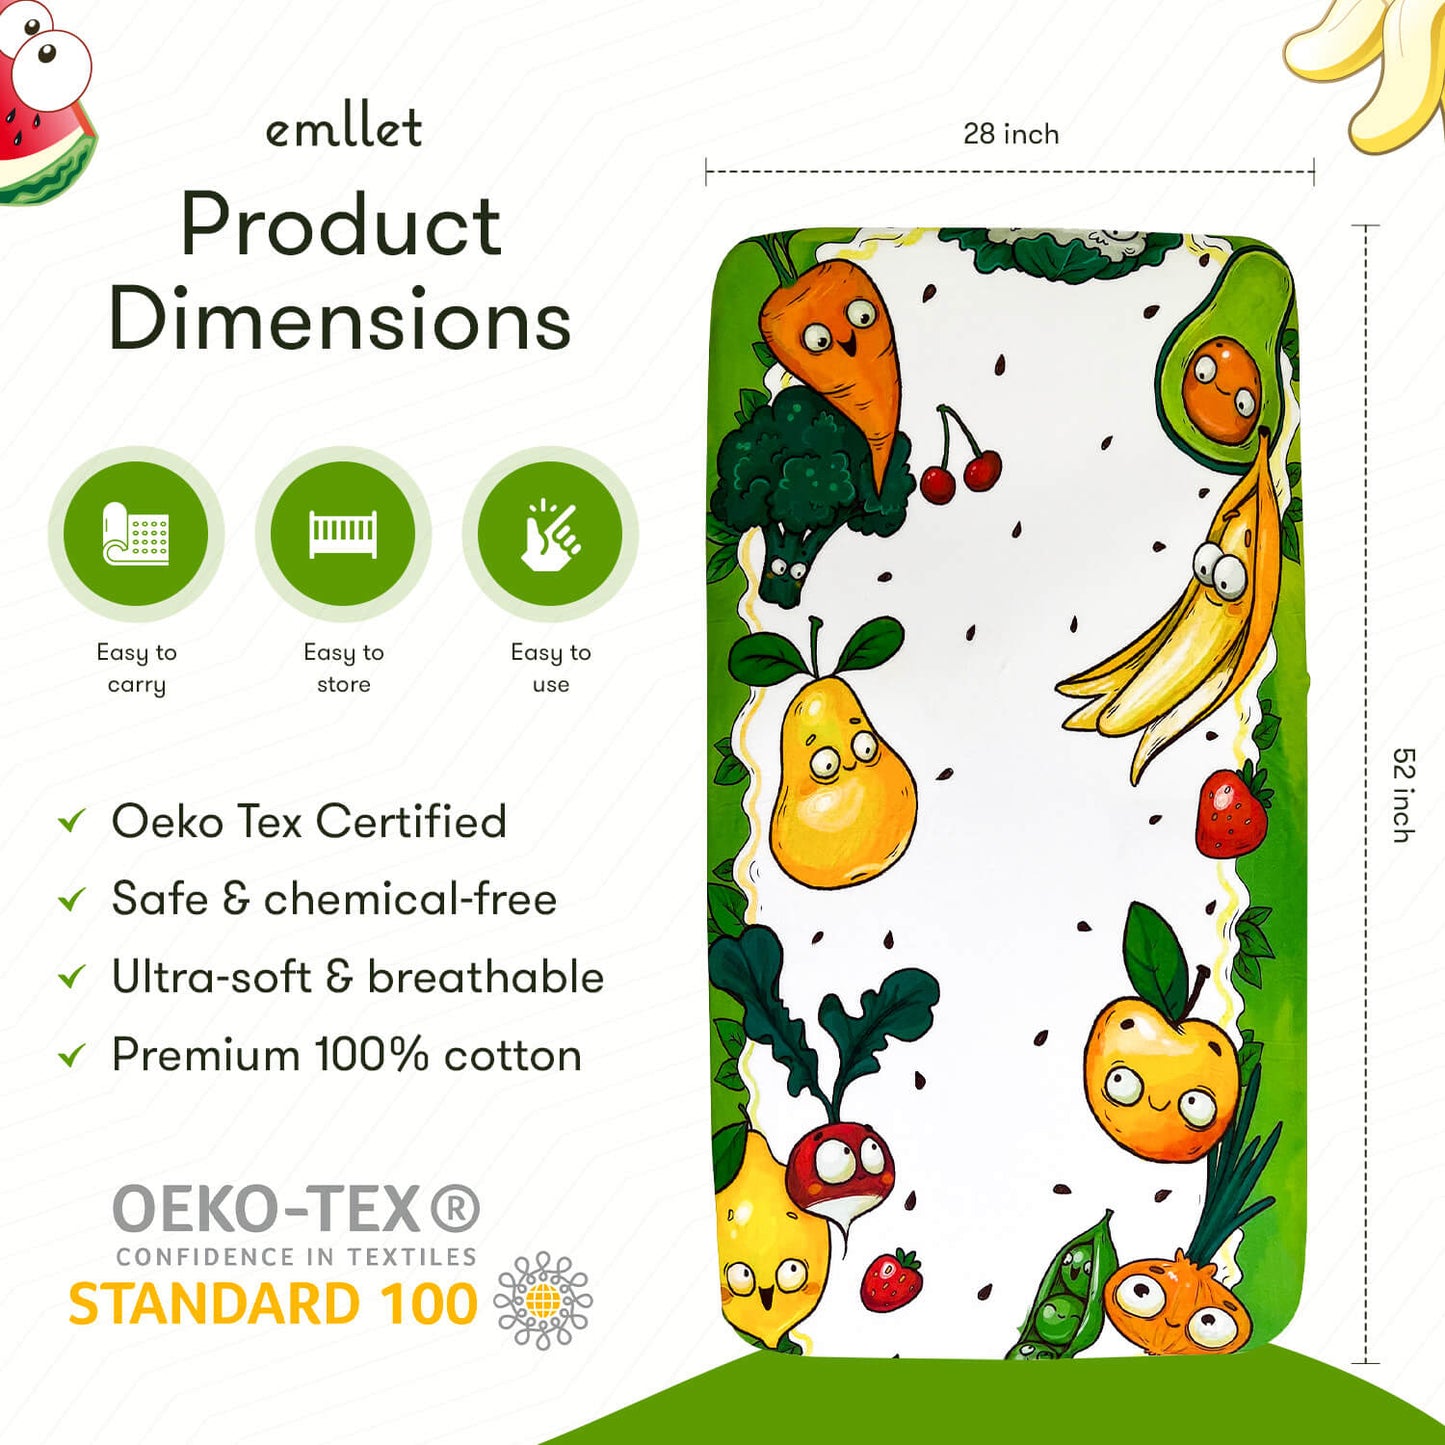 Emllet Veggies Crib Sheet, product dimensions